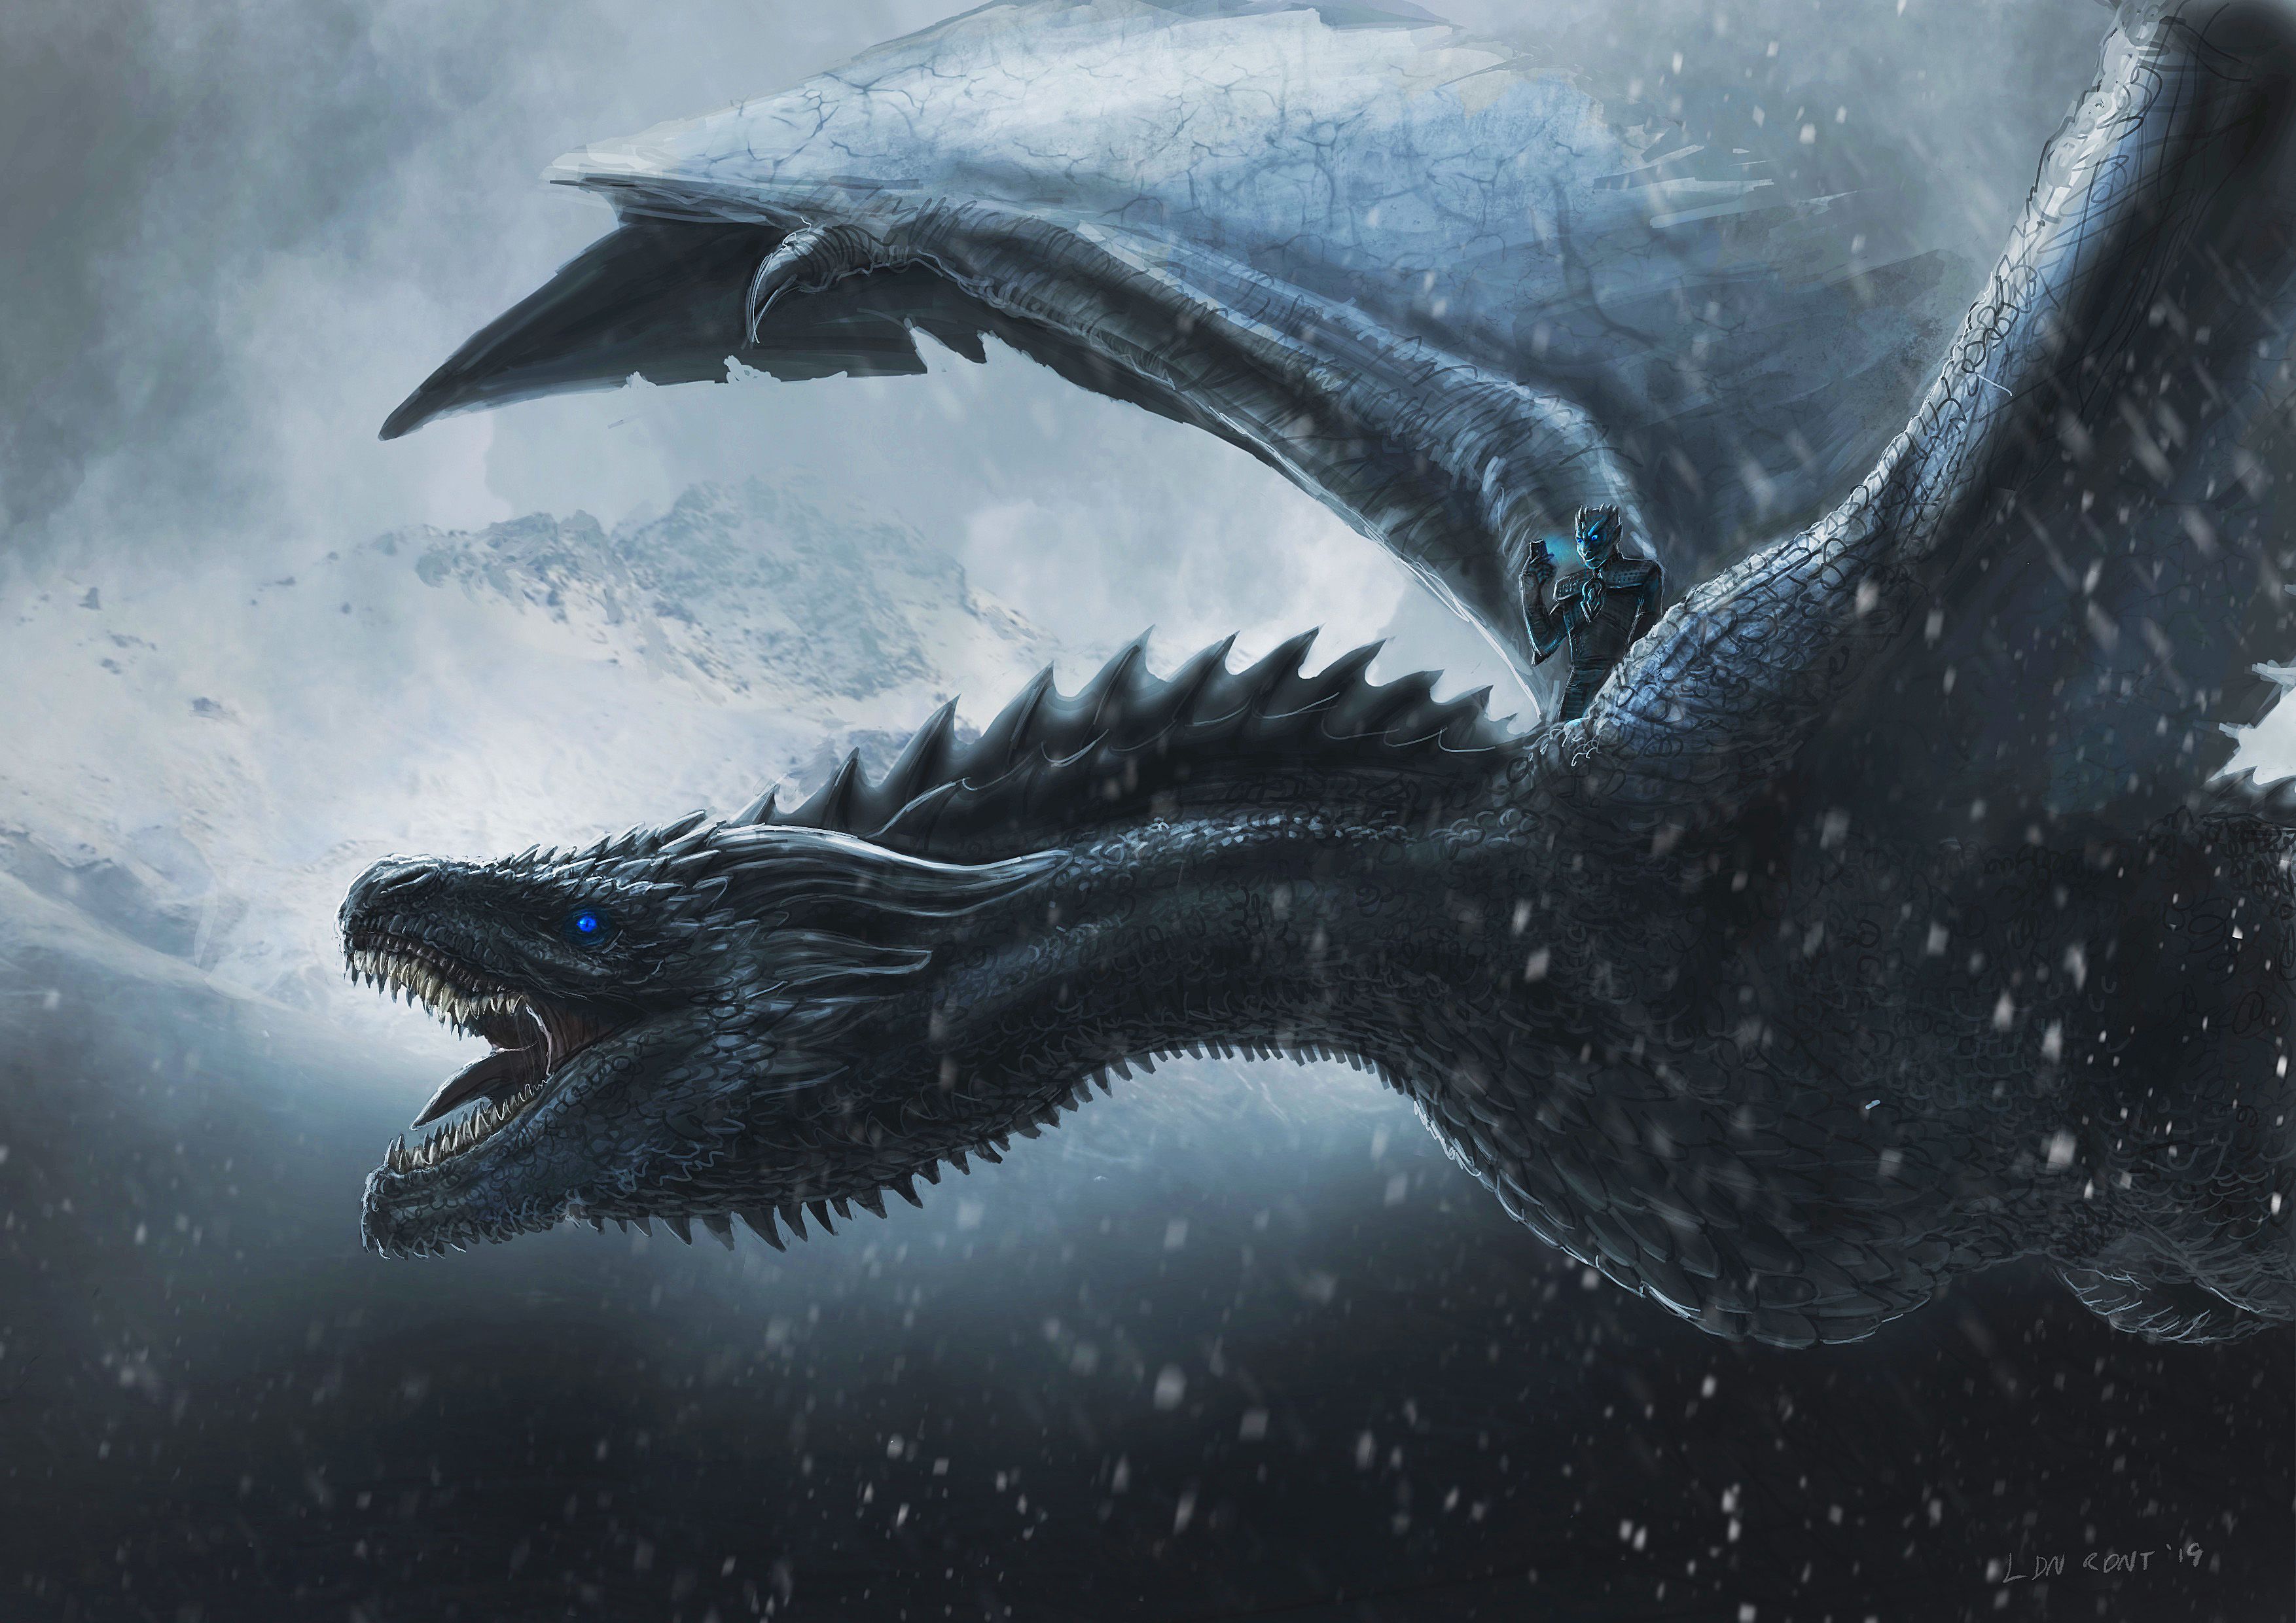 Night King Dragon Art Wallpaper, HD Artist 4K Wallpaper, Image, Photo and Background. Game of thrones artwork, Game of thrones dragons, Ice dragon